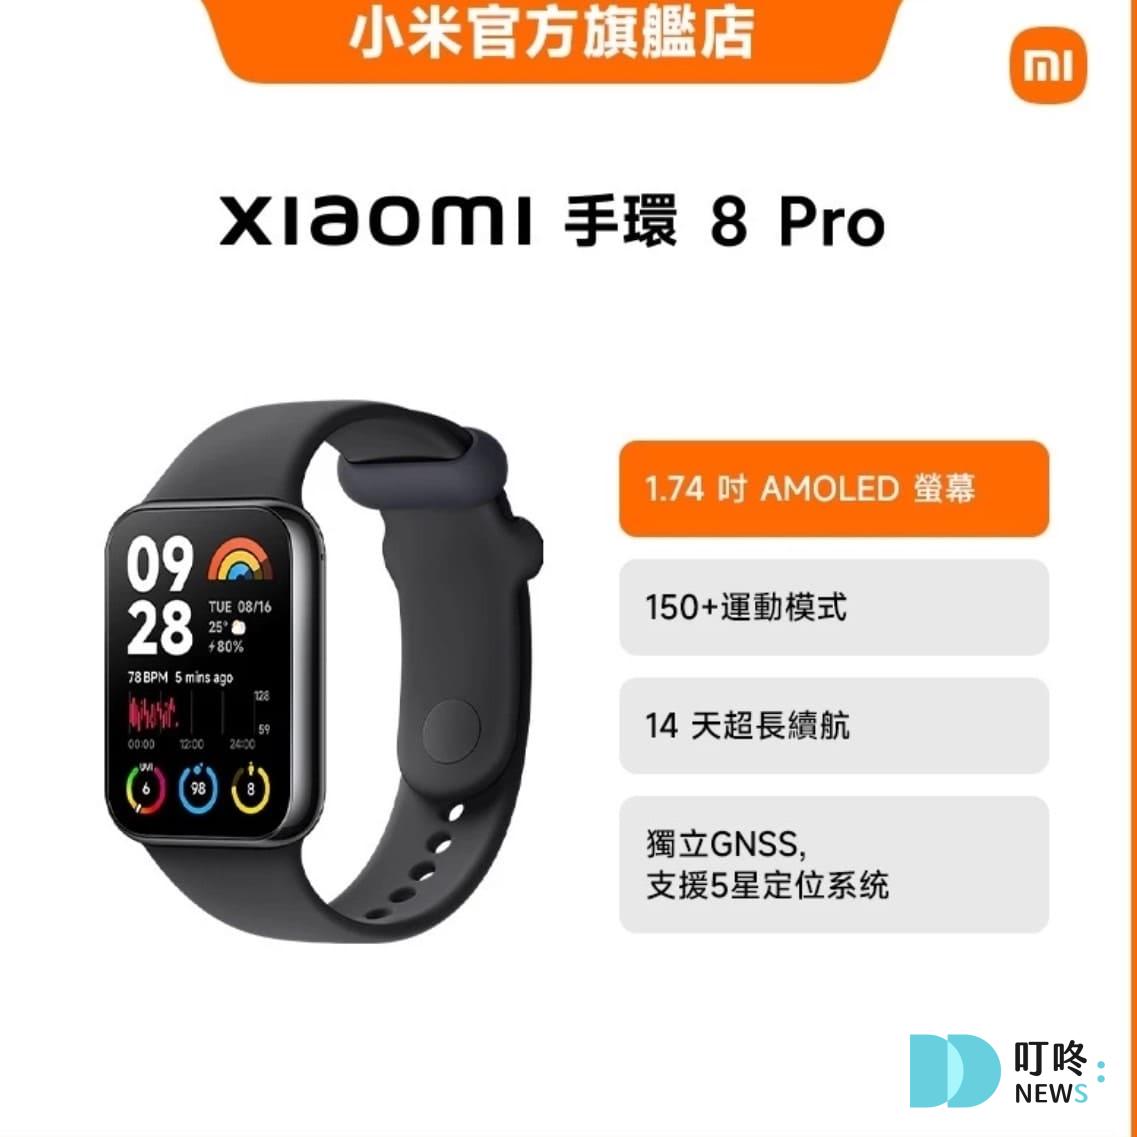 3. Xiaomi 小米手環 8 Pro $1,695